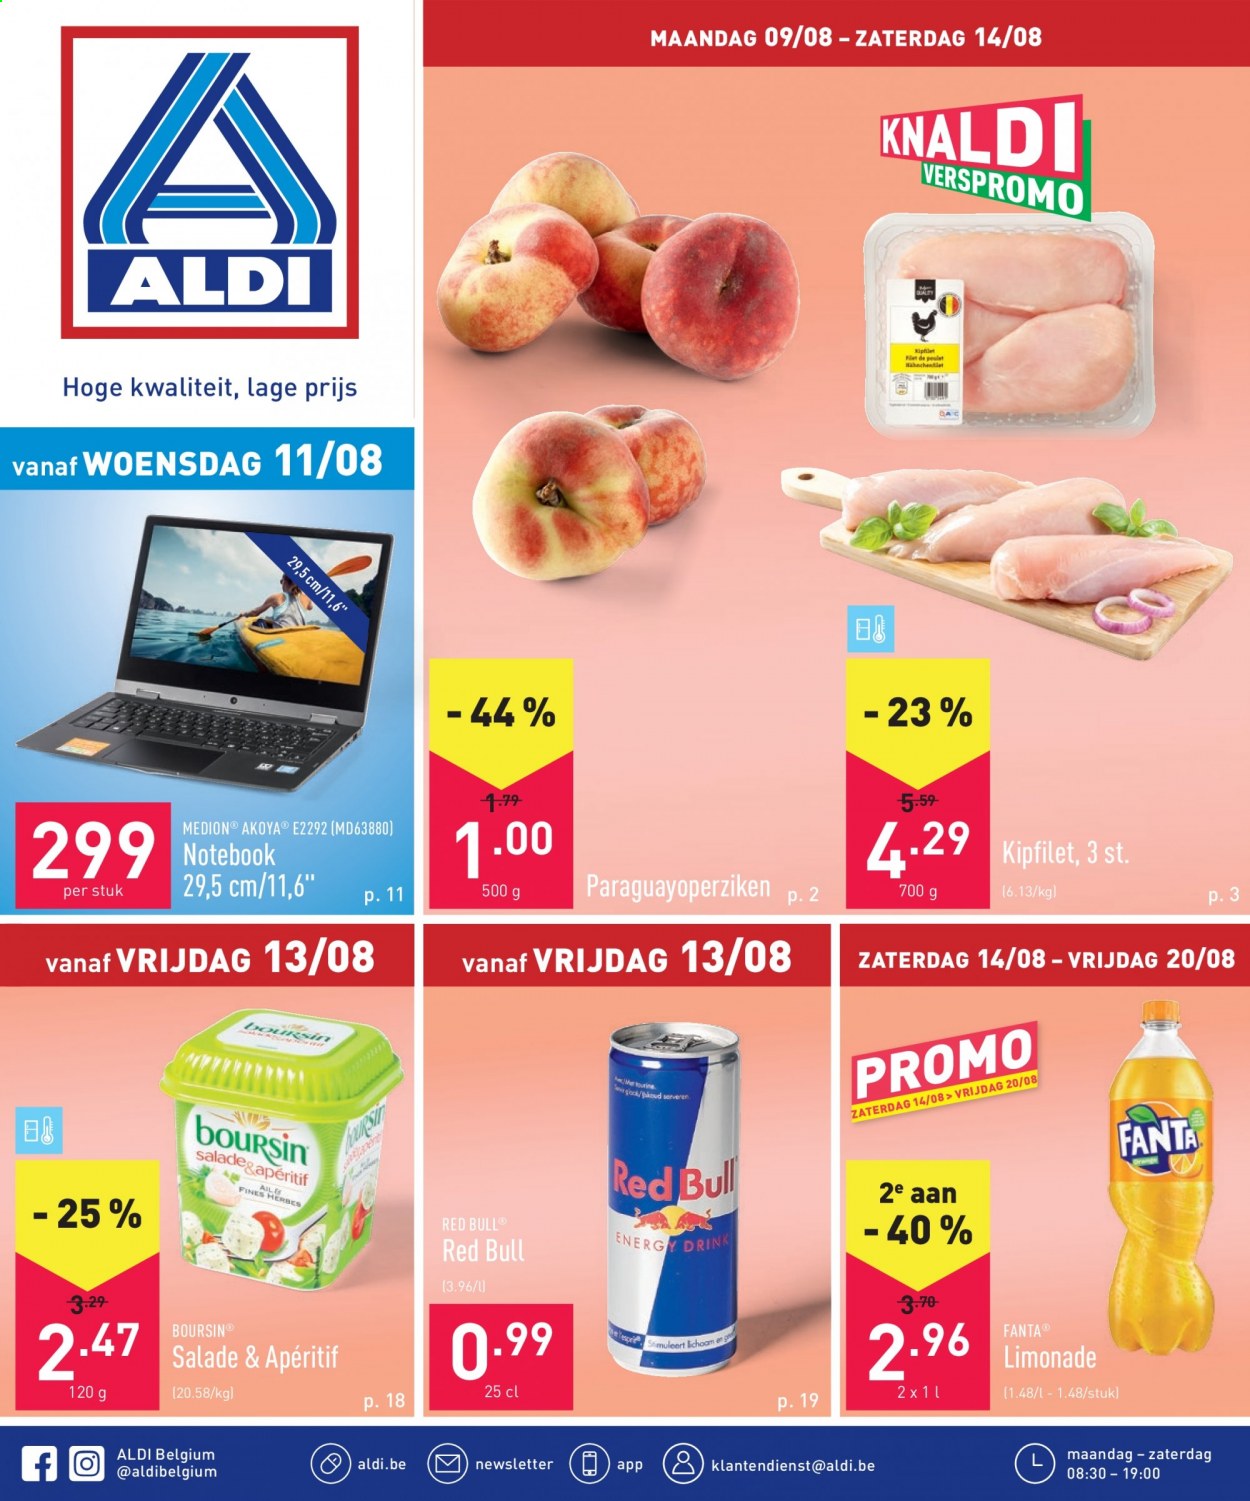 thumbnail - ALDI-aanbieding - 09/08/2021 - 14/08/2021 -  producten in de aanbieding - kipfilet, Red Bull, Fanta, Boursin. Pagina 1.